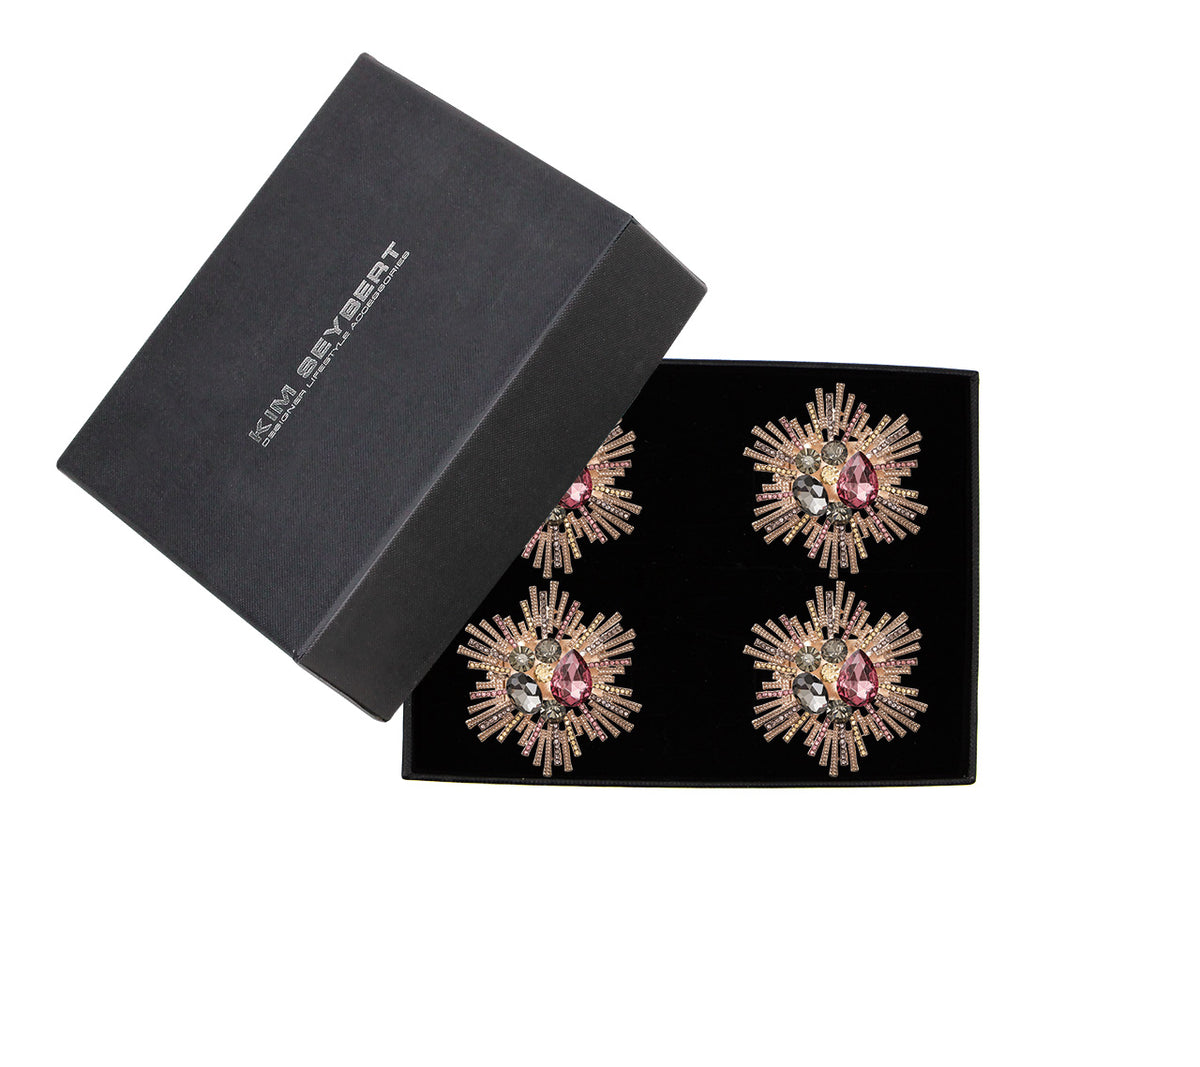 Kim Seybert Luxury Bijoux Napkin Ring in Plum & Gold in a Gift Box